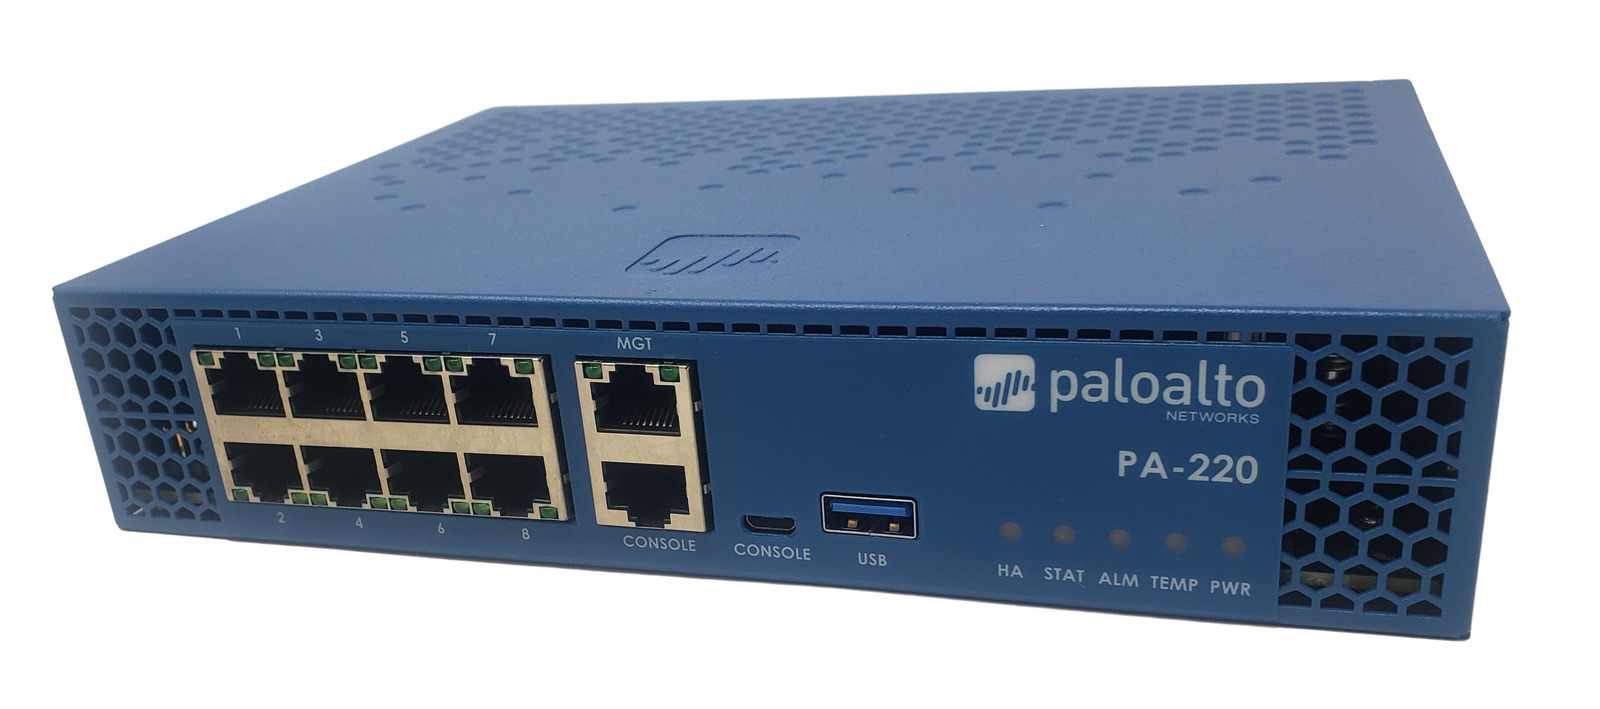 Palo Alto Pa-220 Network Security Appliance Firewall